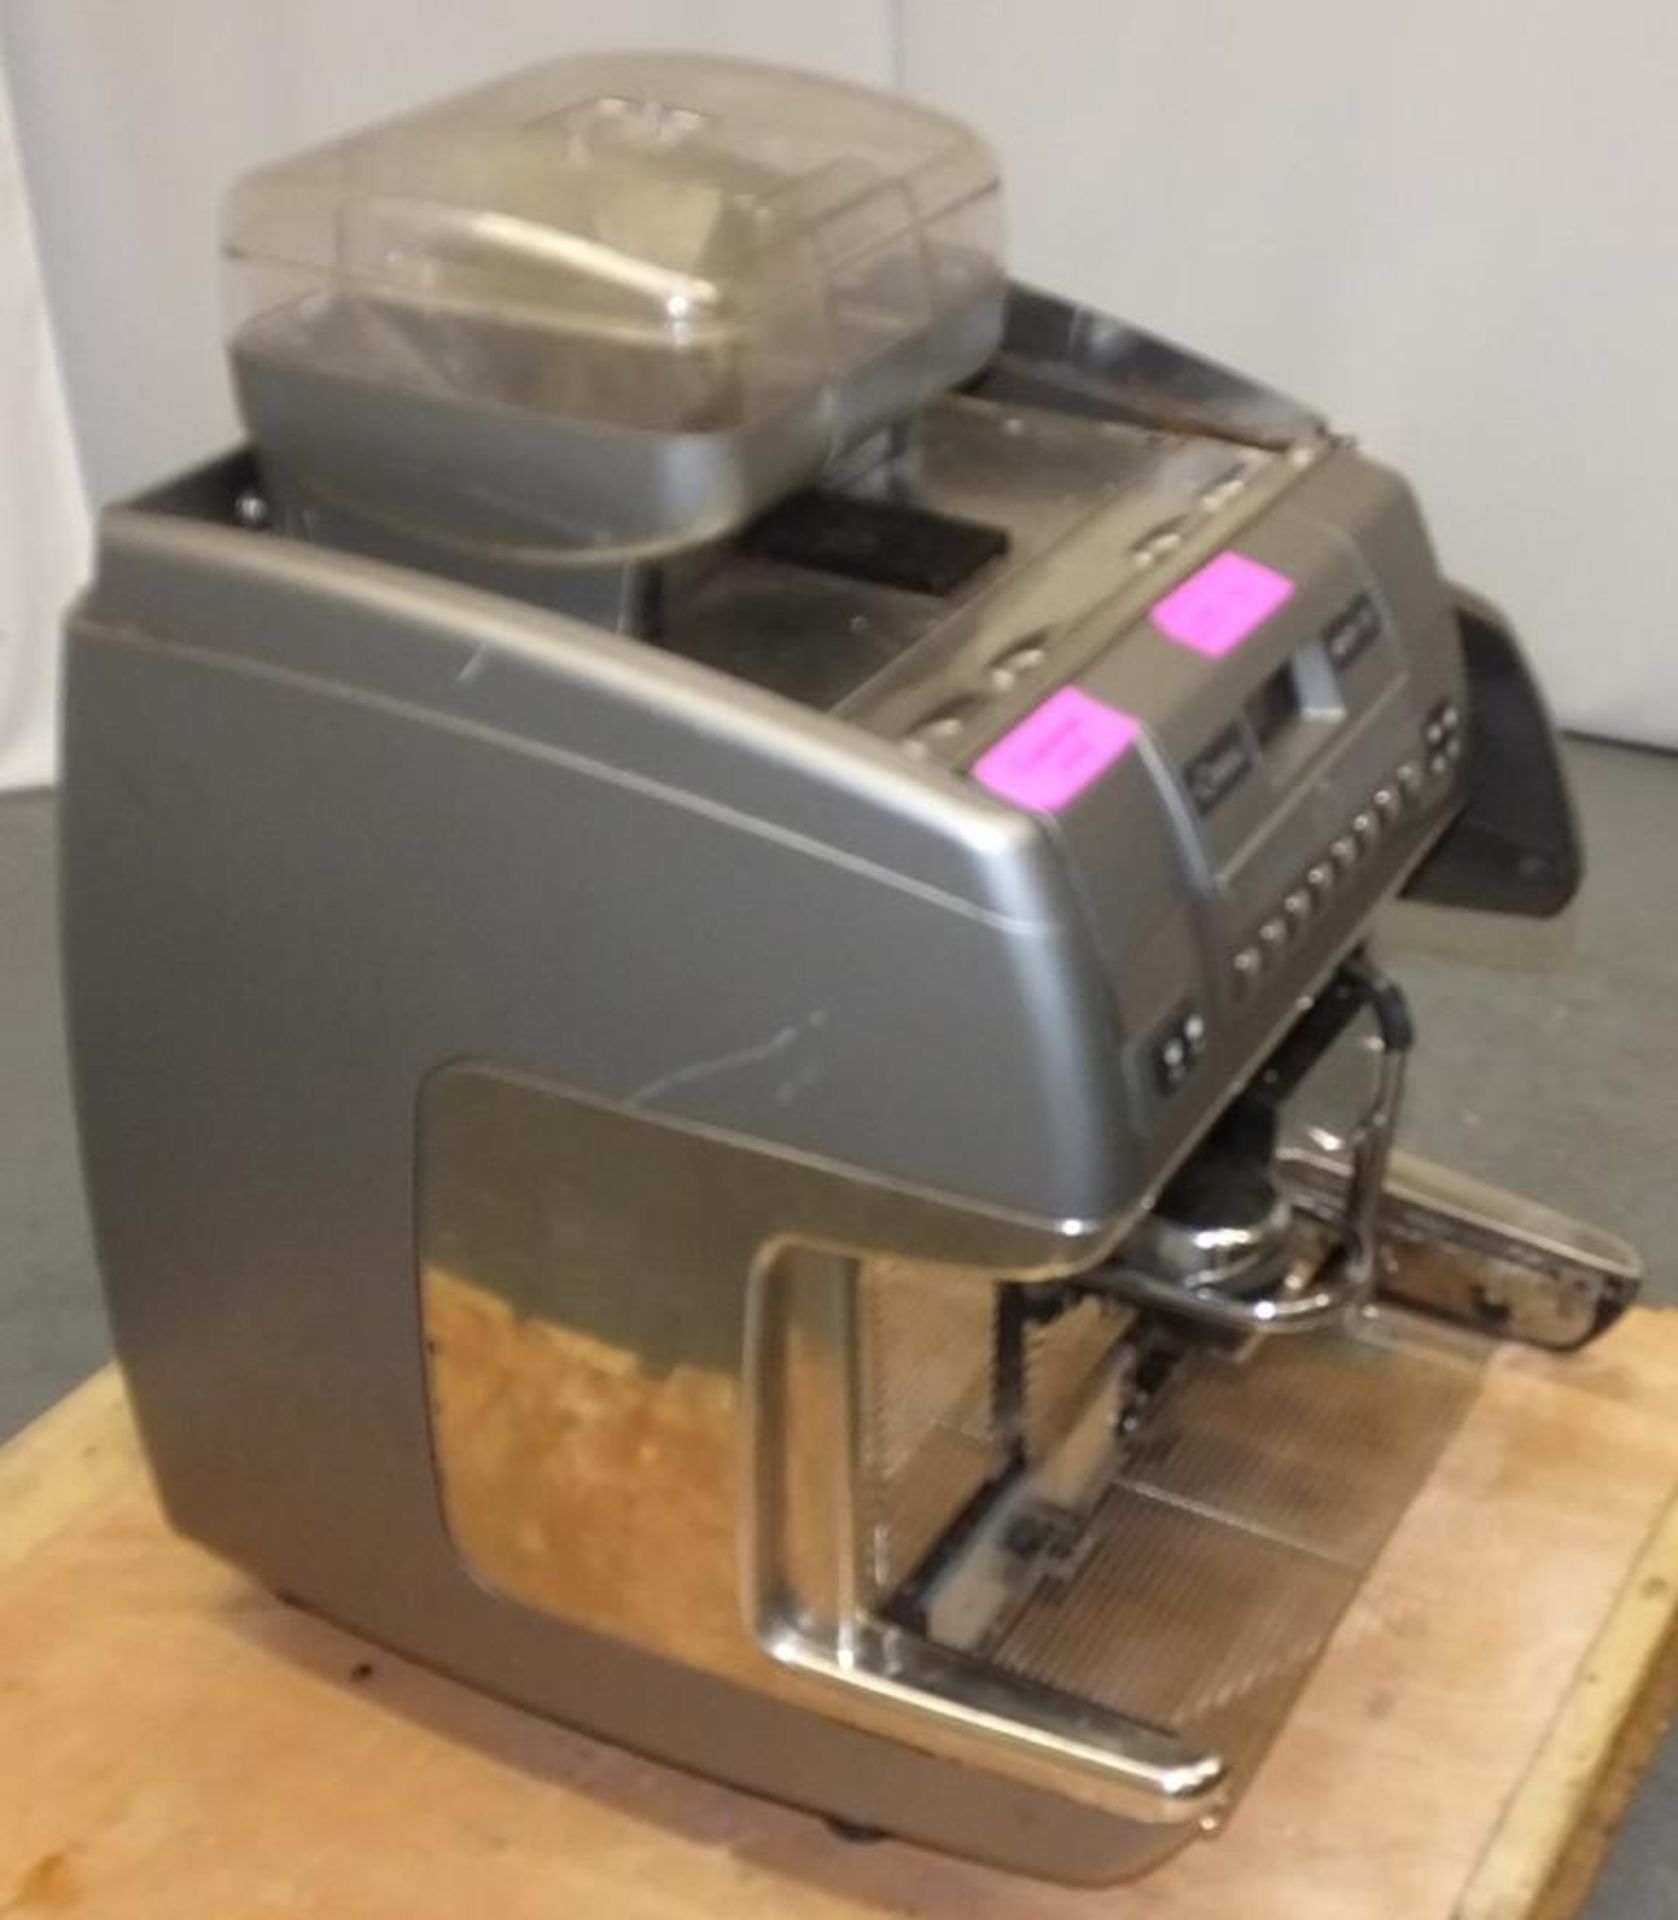 La Cimbali S39 TE Barsystem Coffee Machine - missing side panel - Image 7 of 8